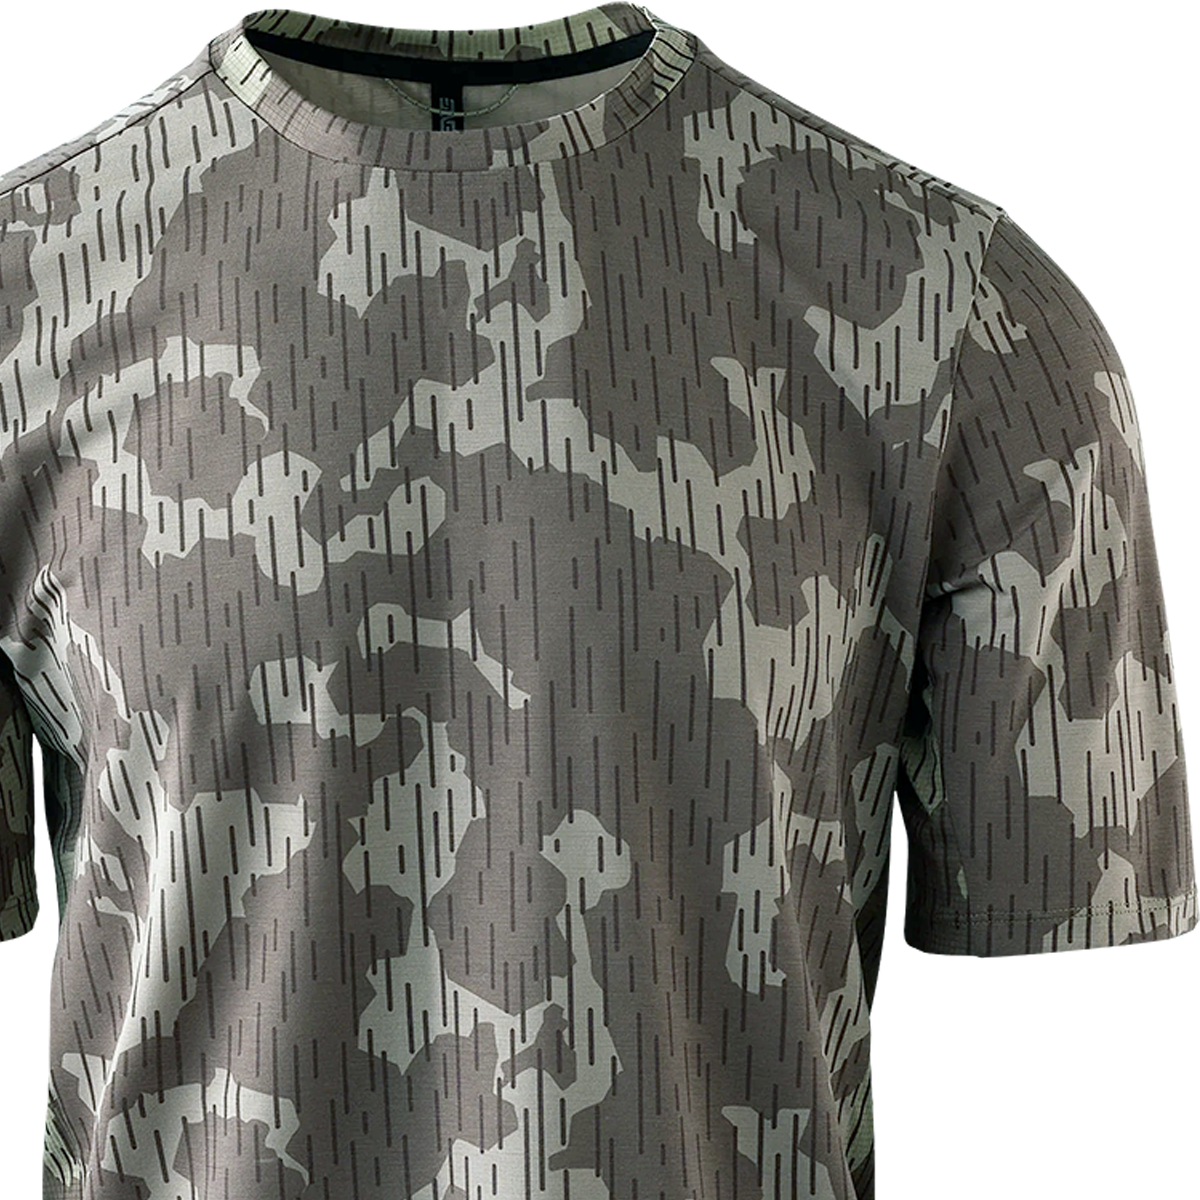 Men's Composite Short Sleeve Jersey alternate view